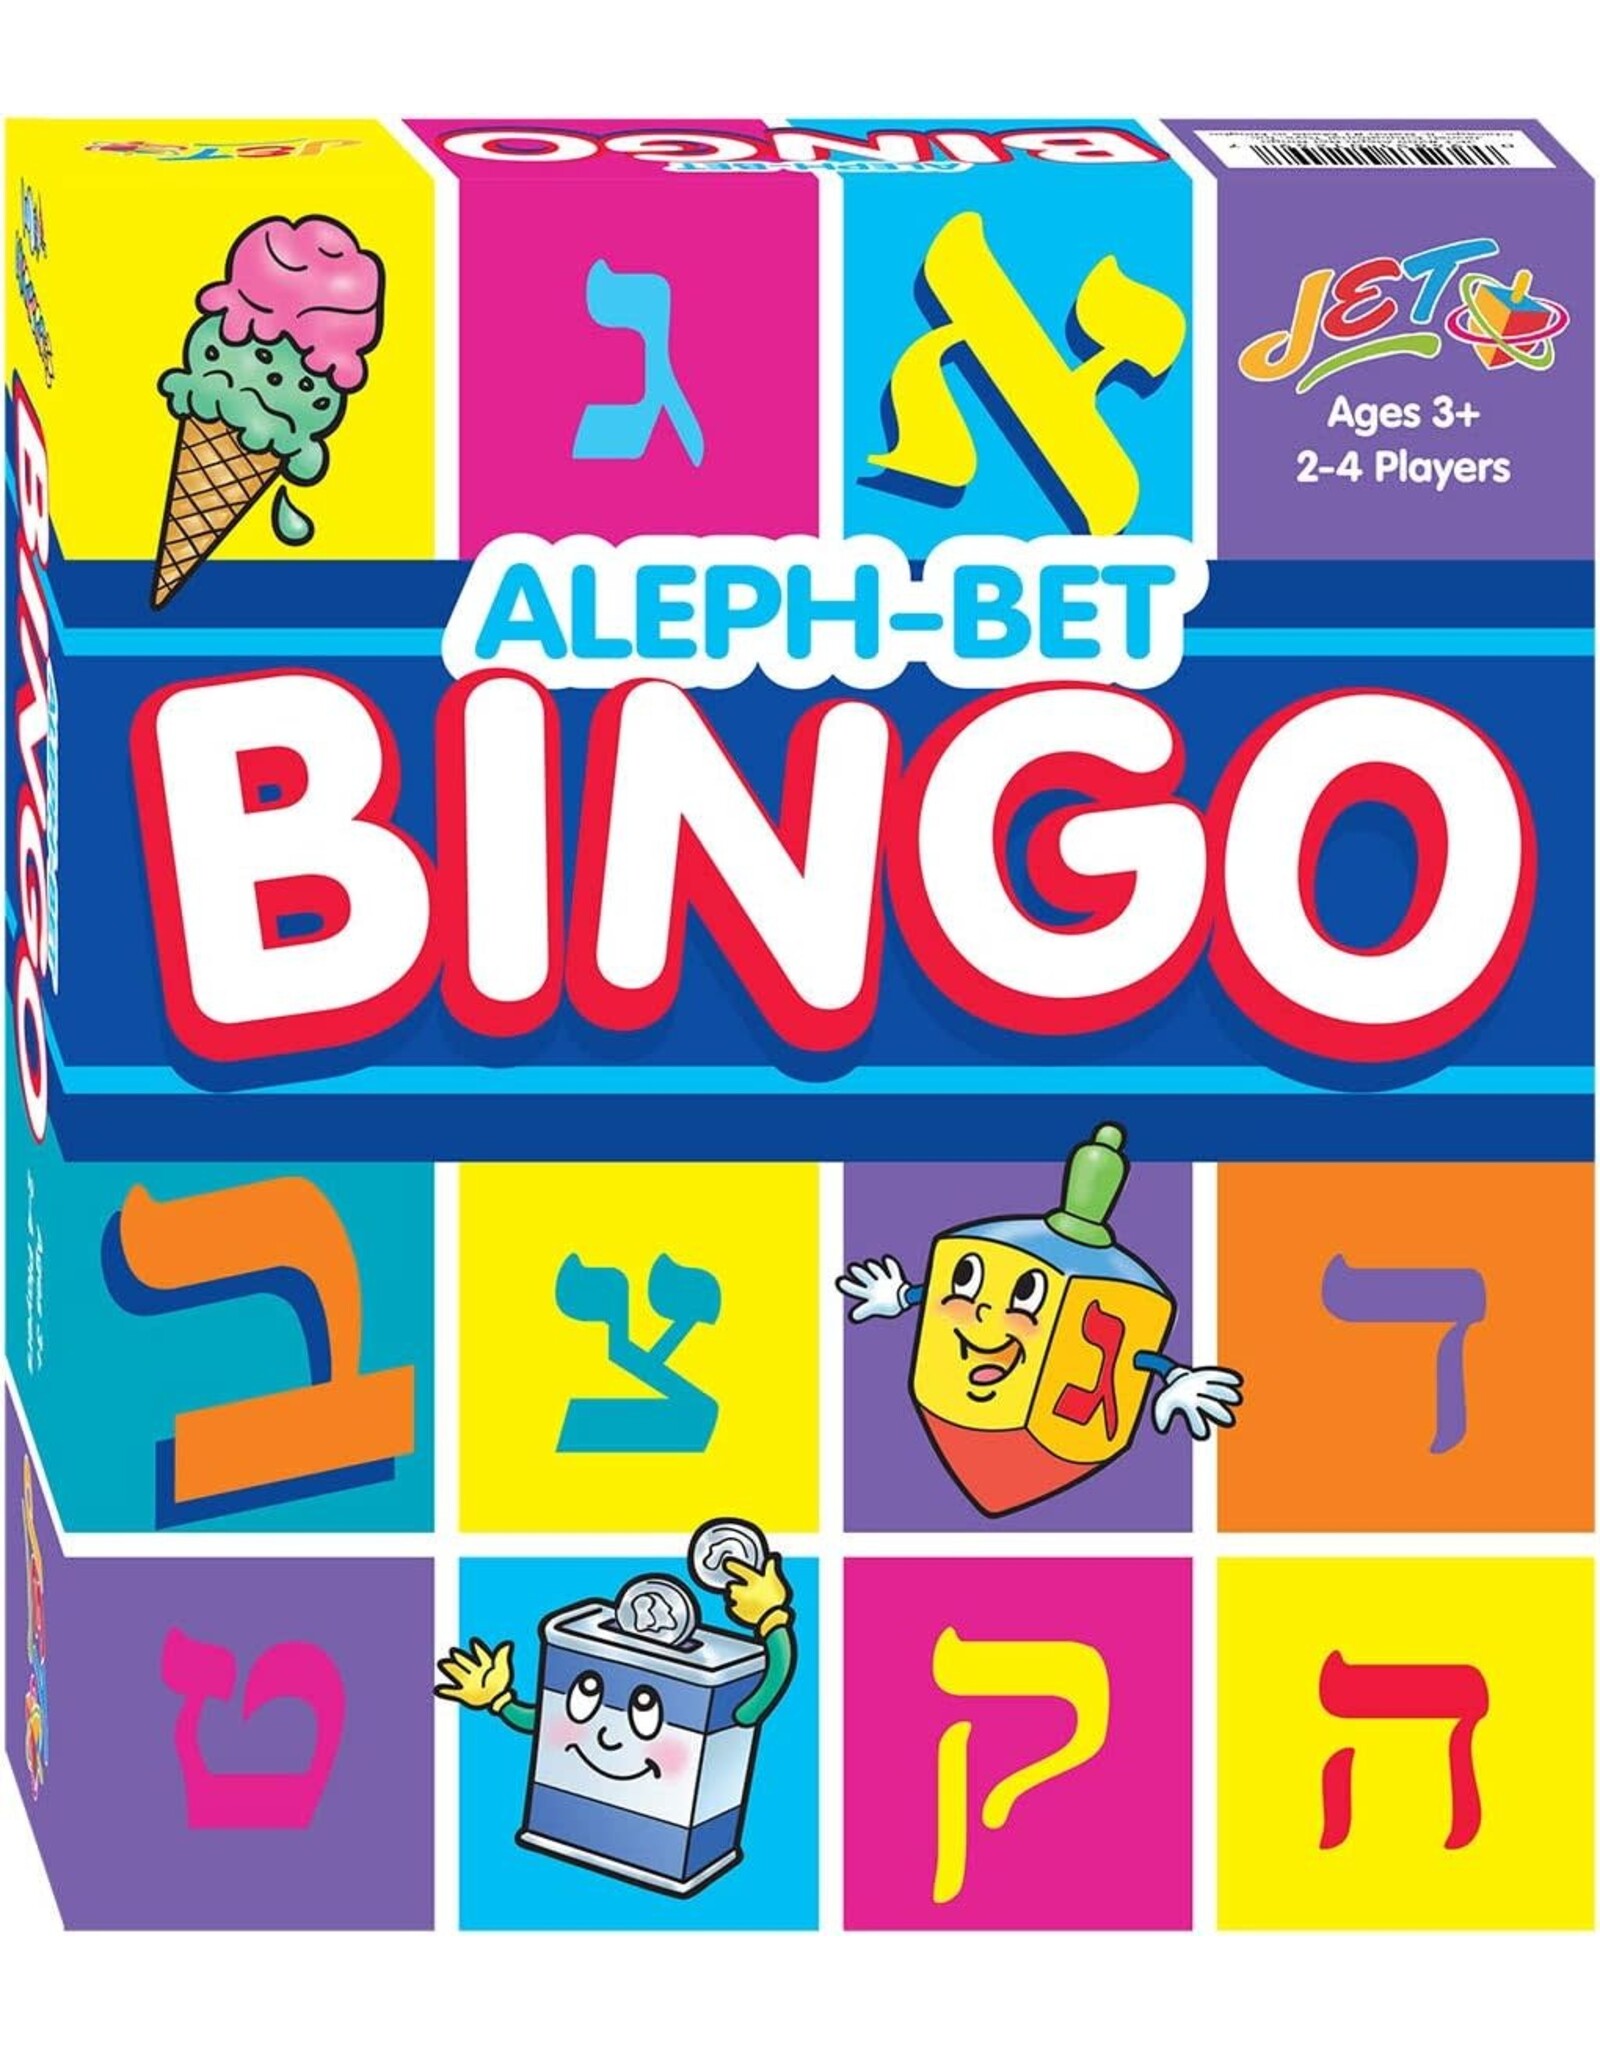 Aleph- Bet Bingo Game